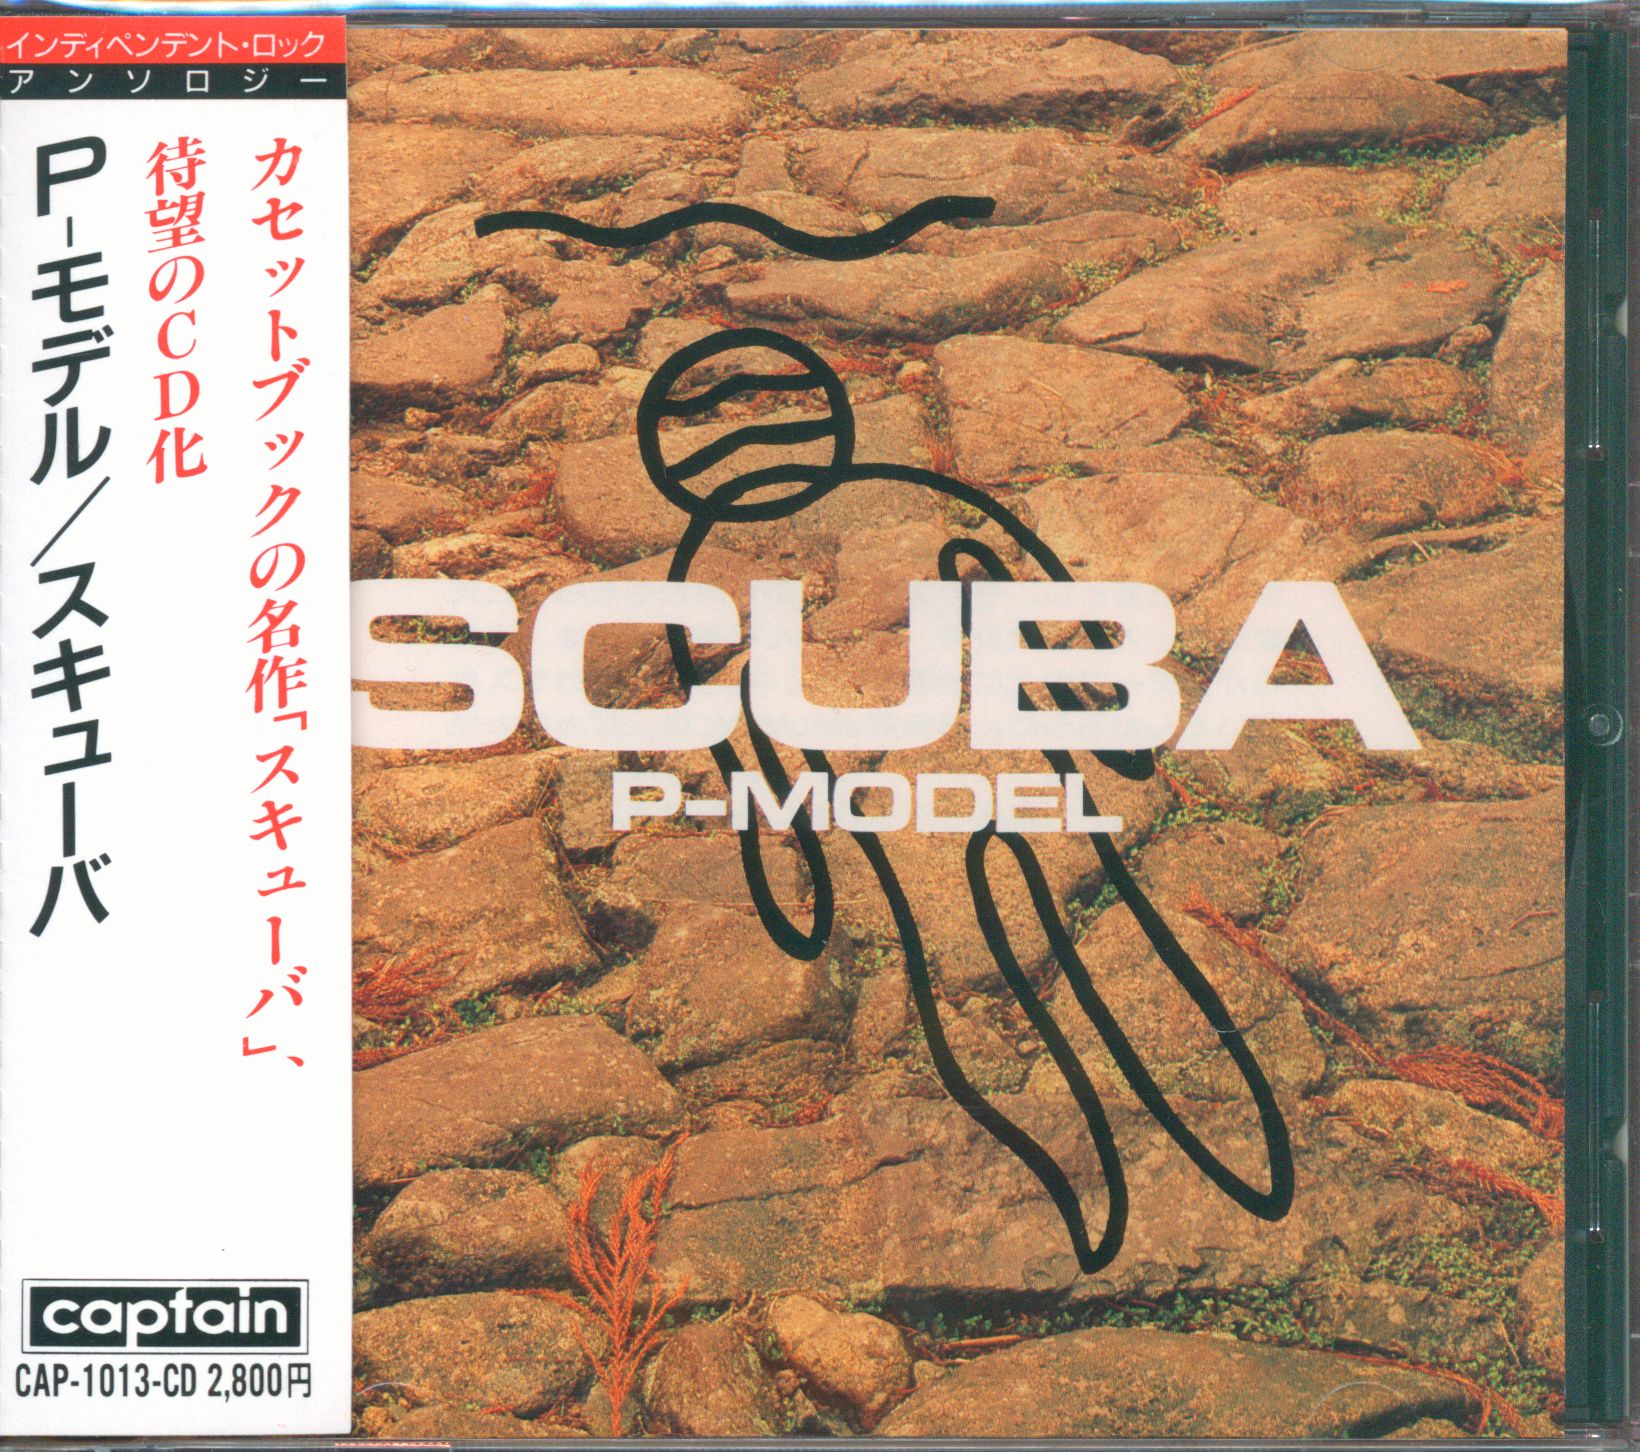 P-MODEL SCUBA CD版 - CD